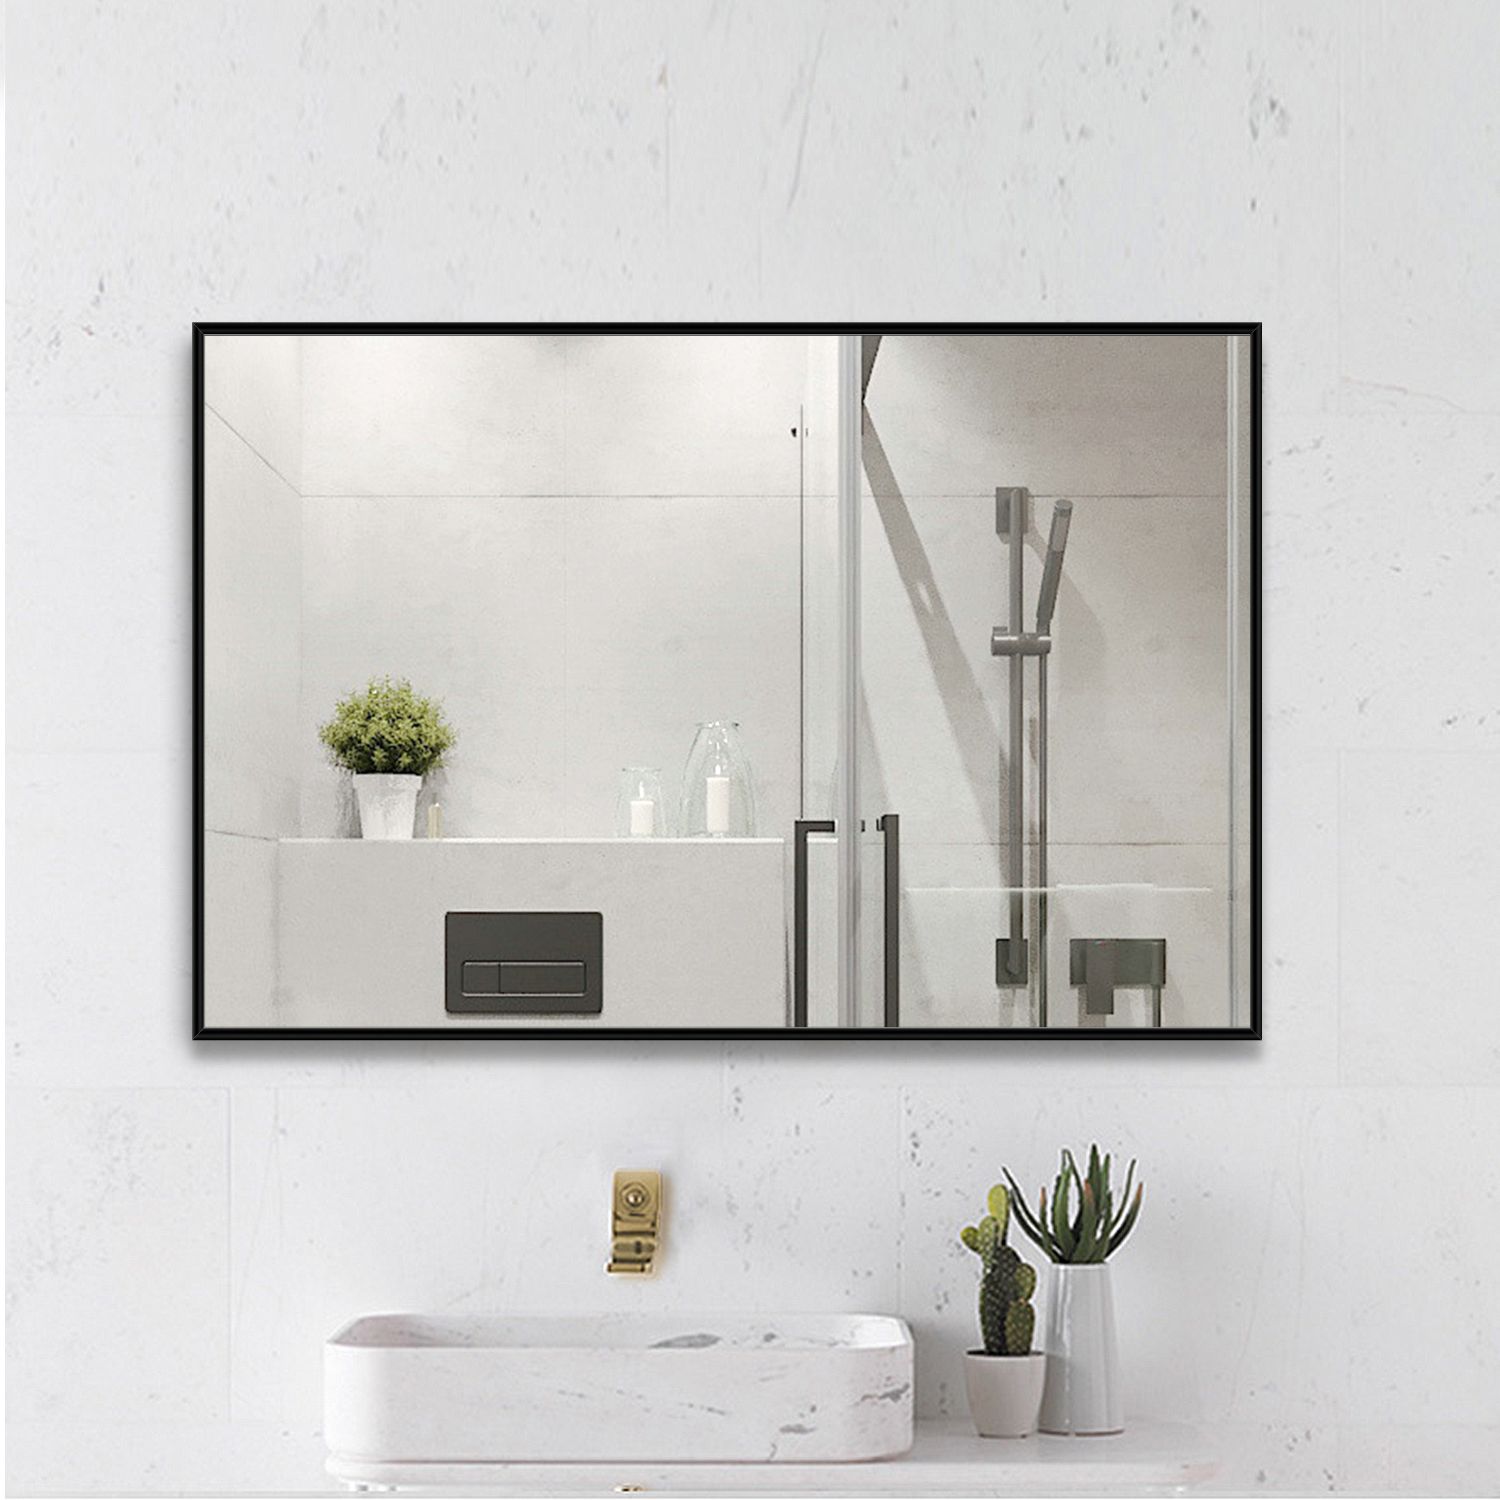 Neutype 38" X 26" Black Bathroom Mirror Modern Aluminum Alloy Frame Intended For Mirror Framed Bathroom Wall Mirrors (View 13 of 15)